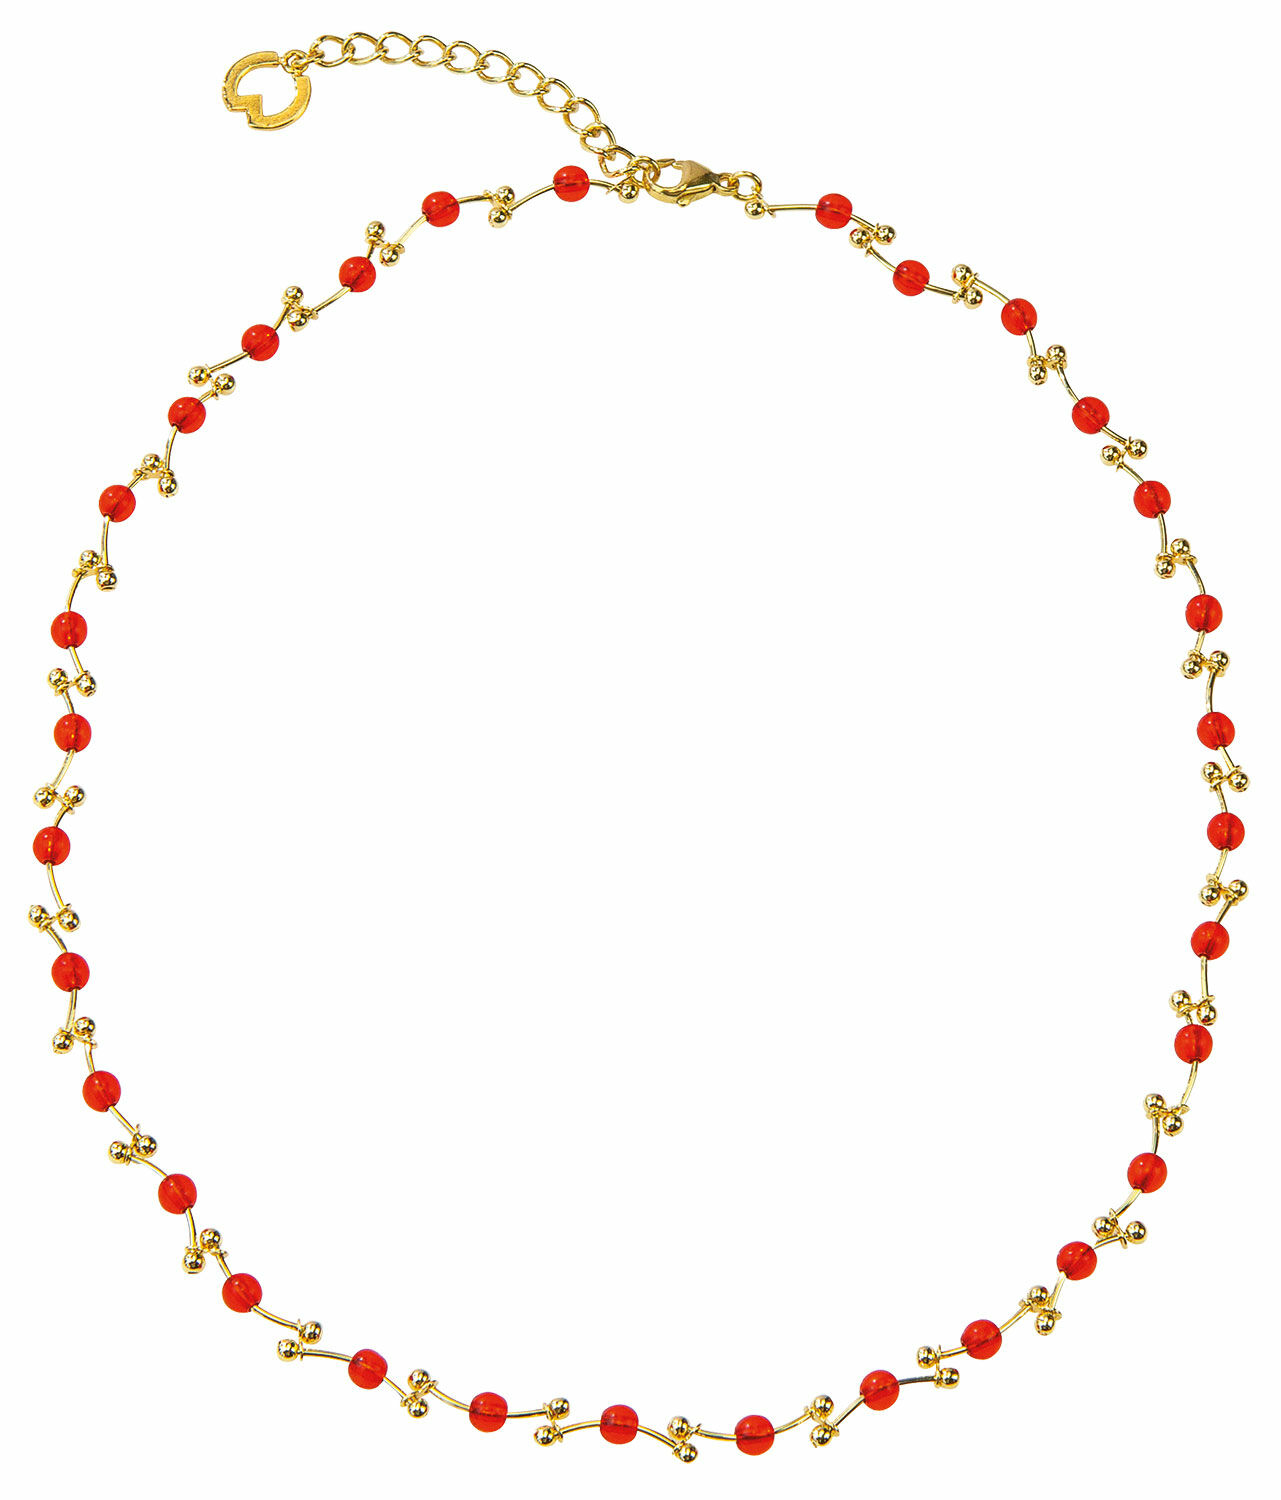 Pearl necklace "Elaine" by Petra Waszak